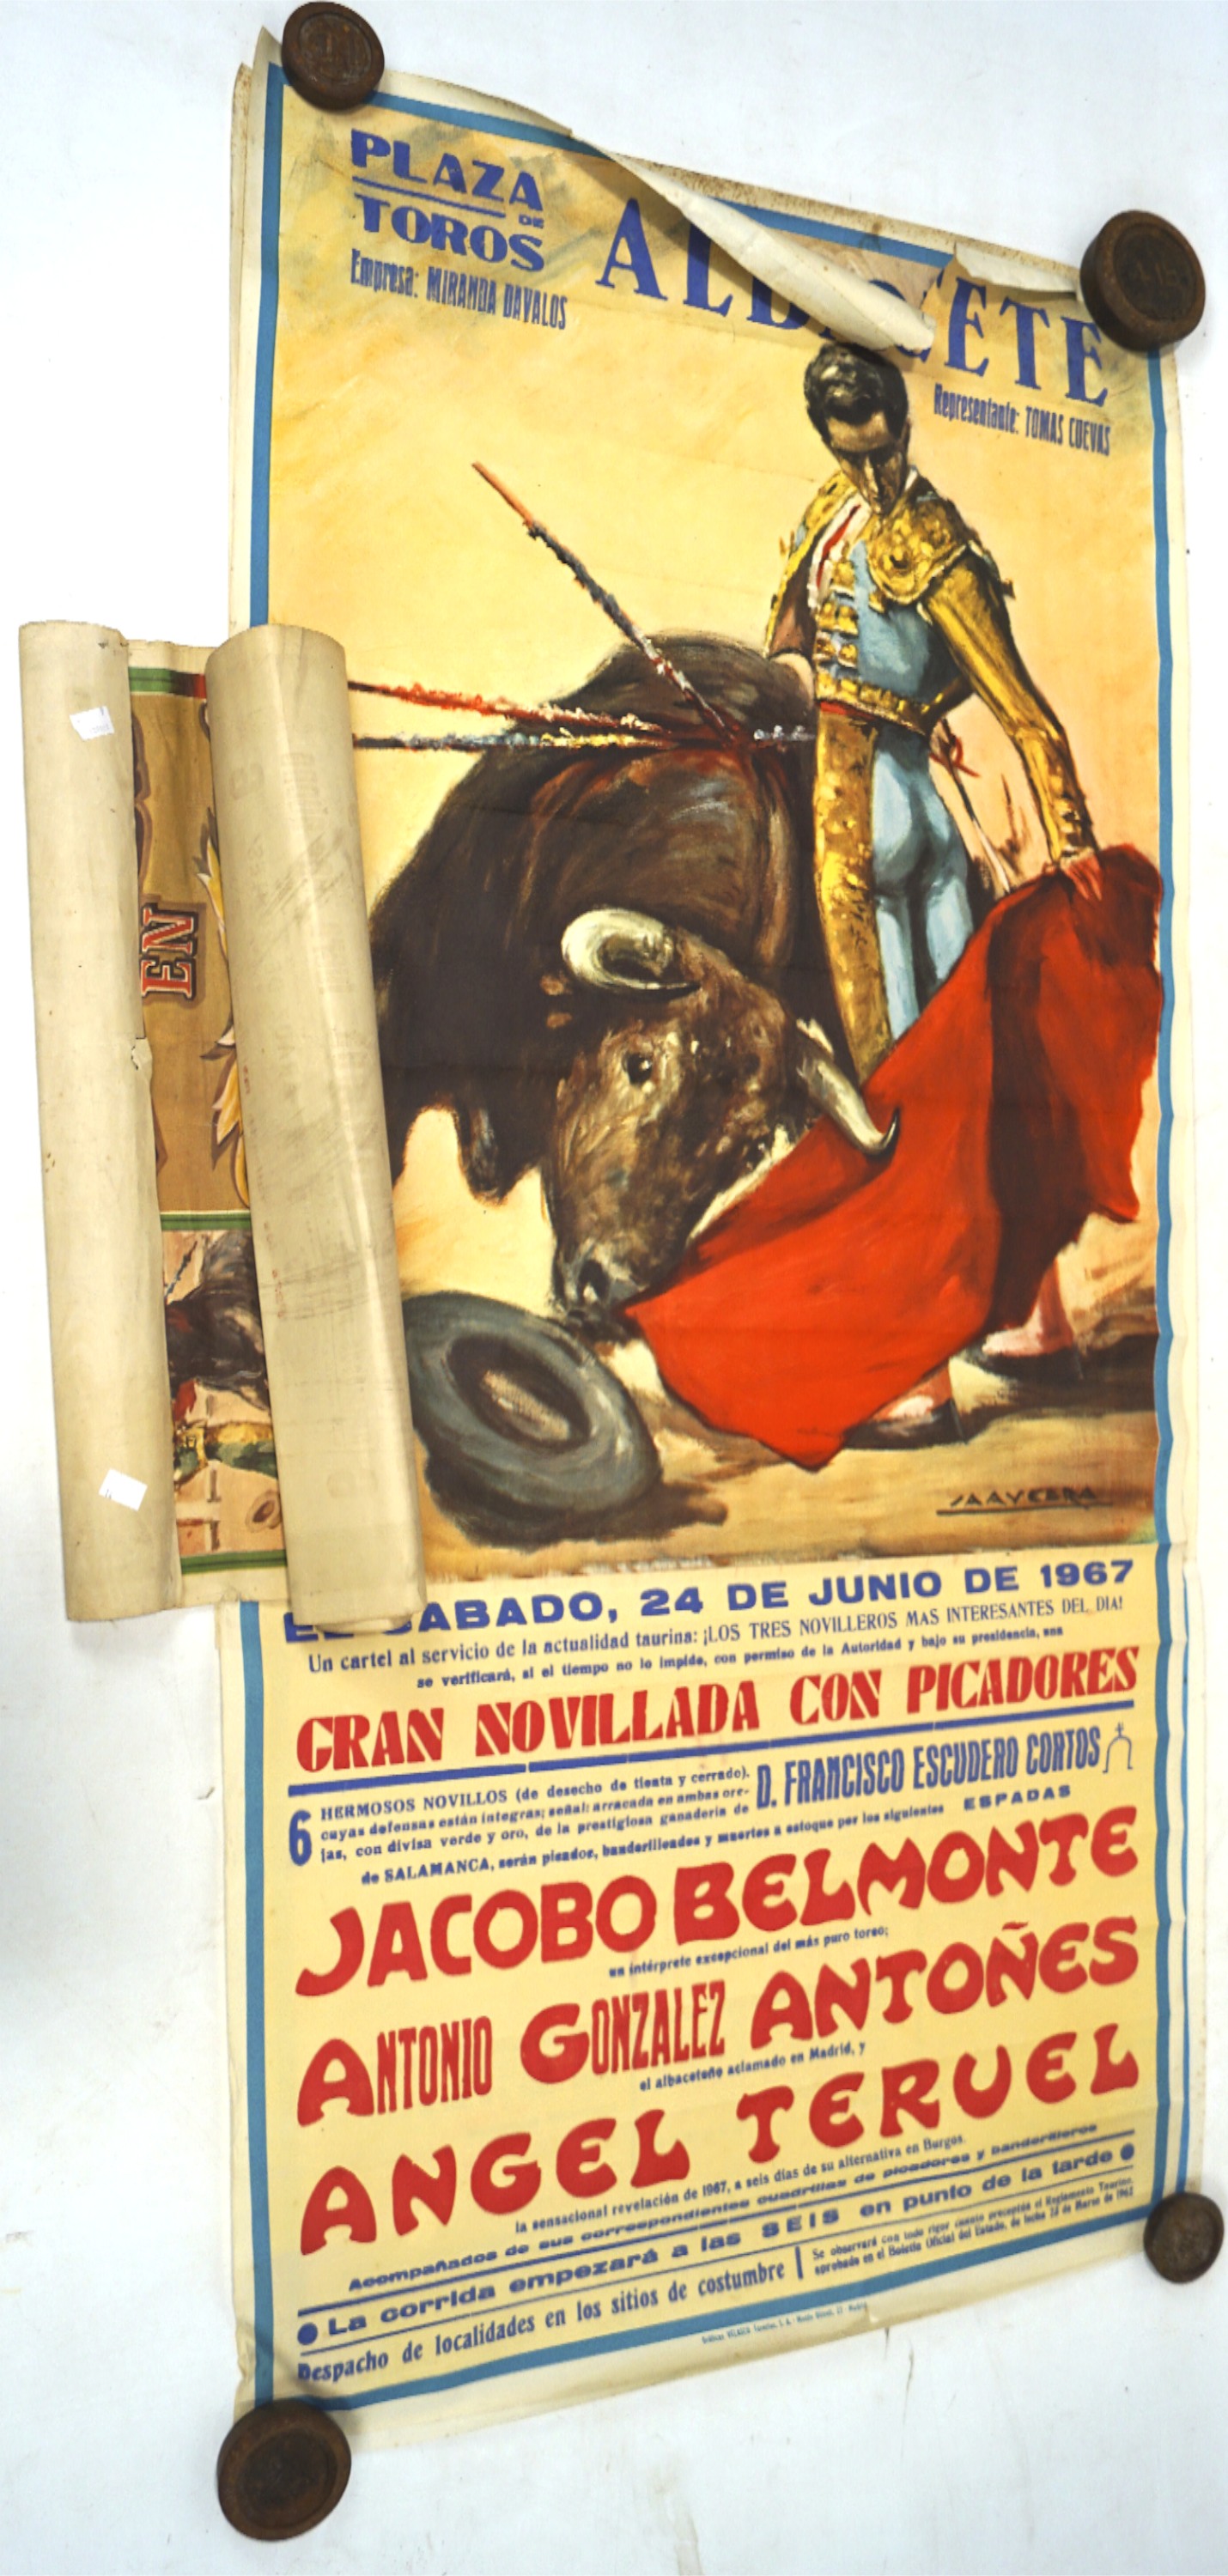 Two original vintage bullfighting advertising posters, both titled 'Plaza de Toros de Albacete', - Image 2 of 3